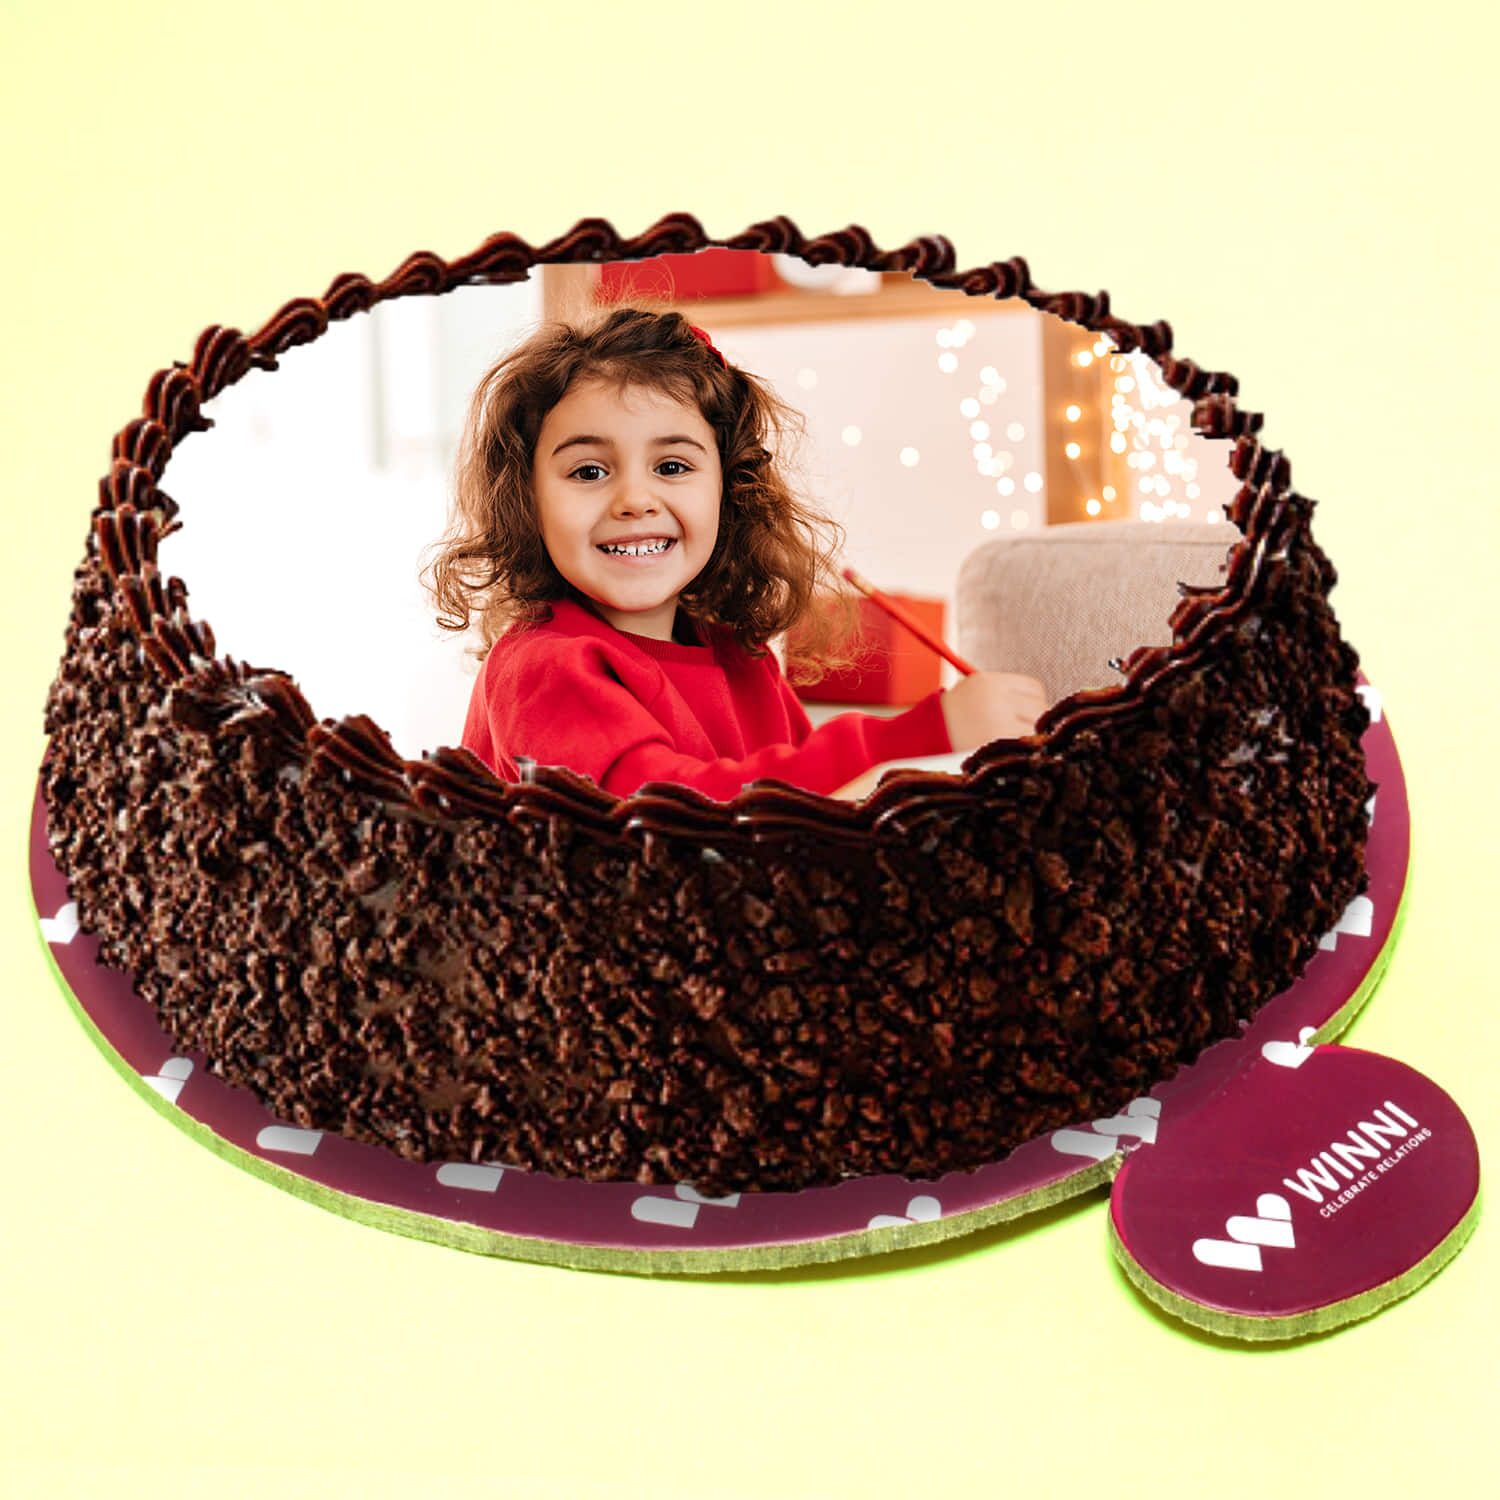 My Happy Birthday Ka Cake New Model Stock Photo - Image of birthday, keke:  173346462